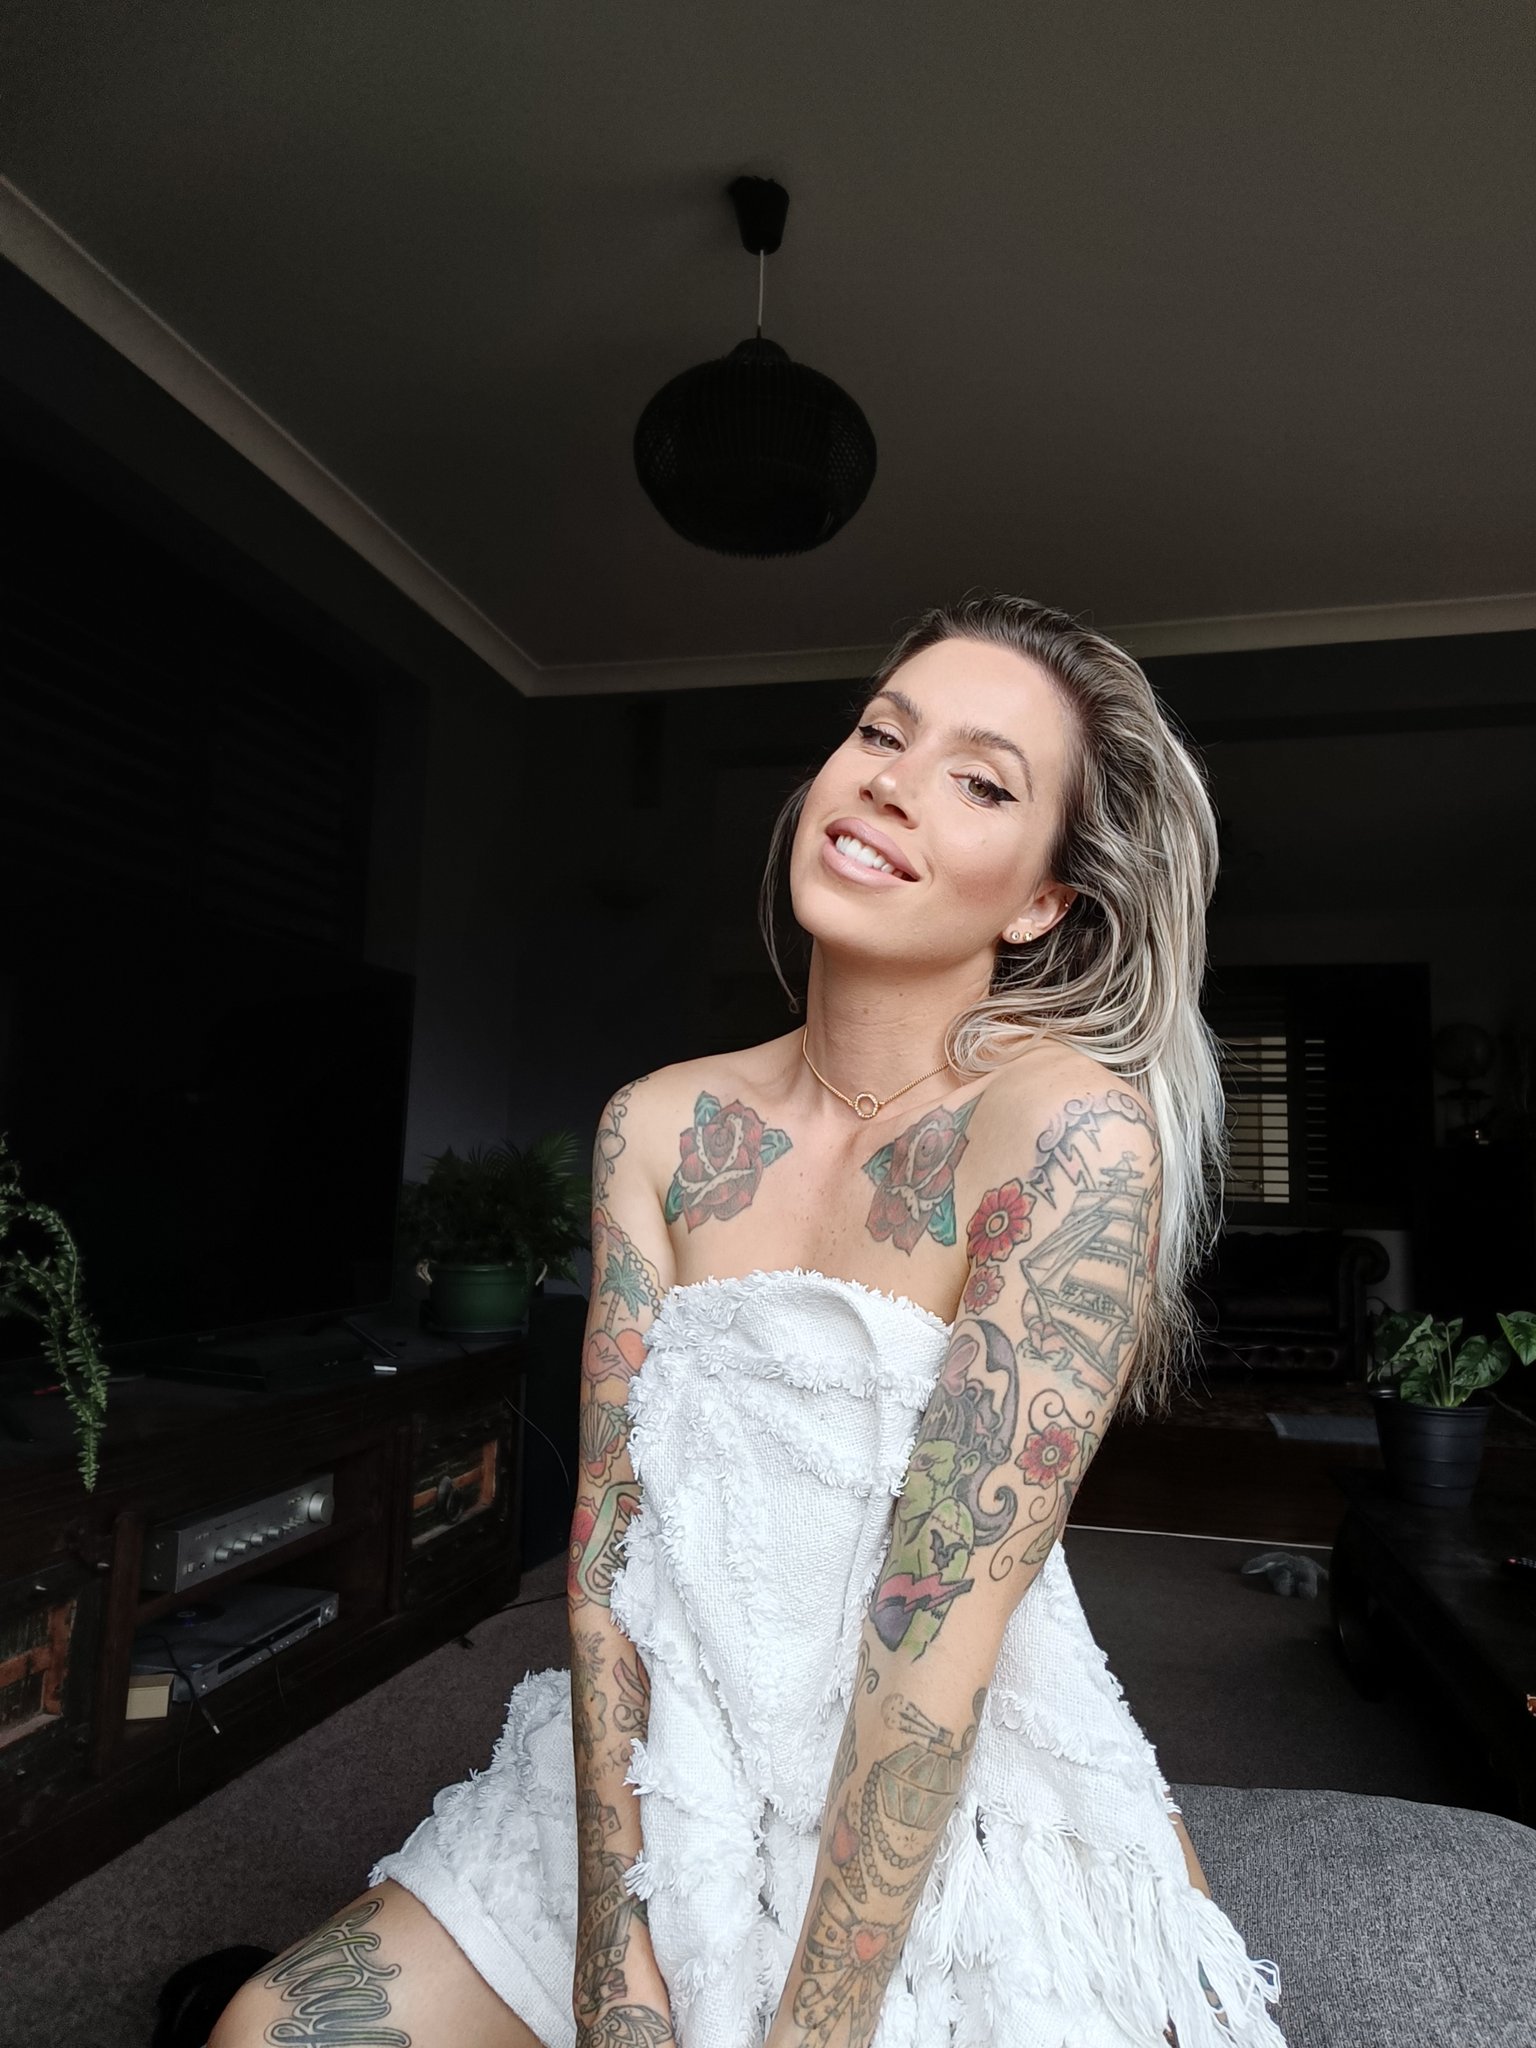 Meet Samii La' Morte, Tattooed Model - Tattooed Women